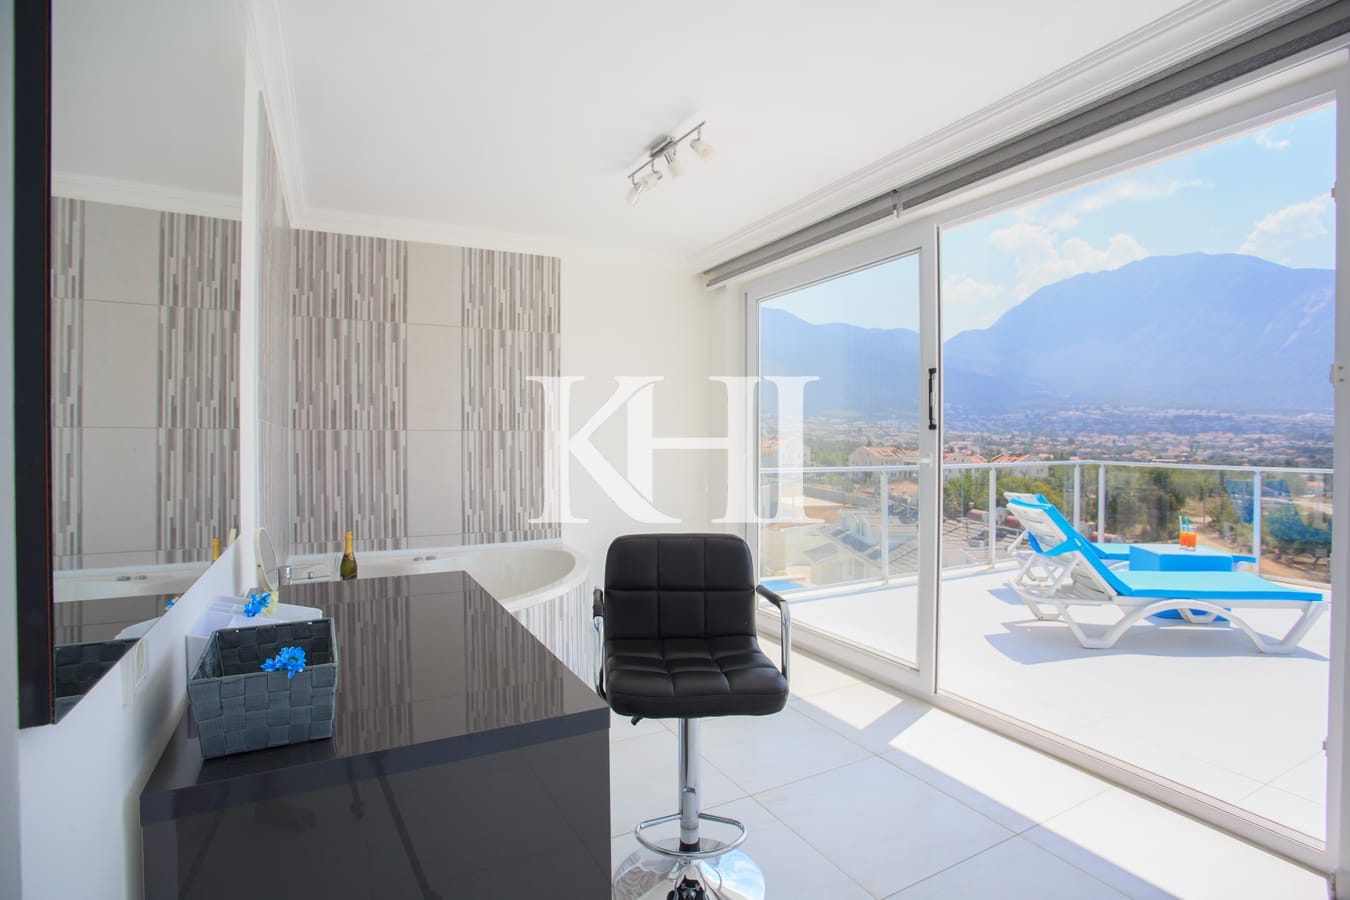 Luxury Modern Villa For Sale In Ovacik Slide Image 15